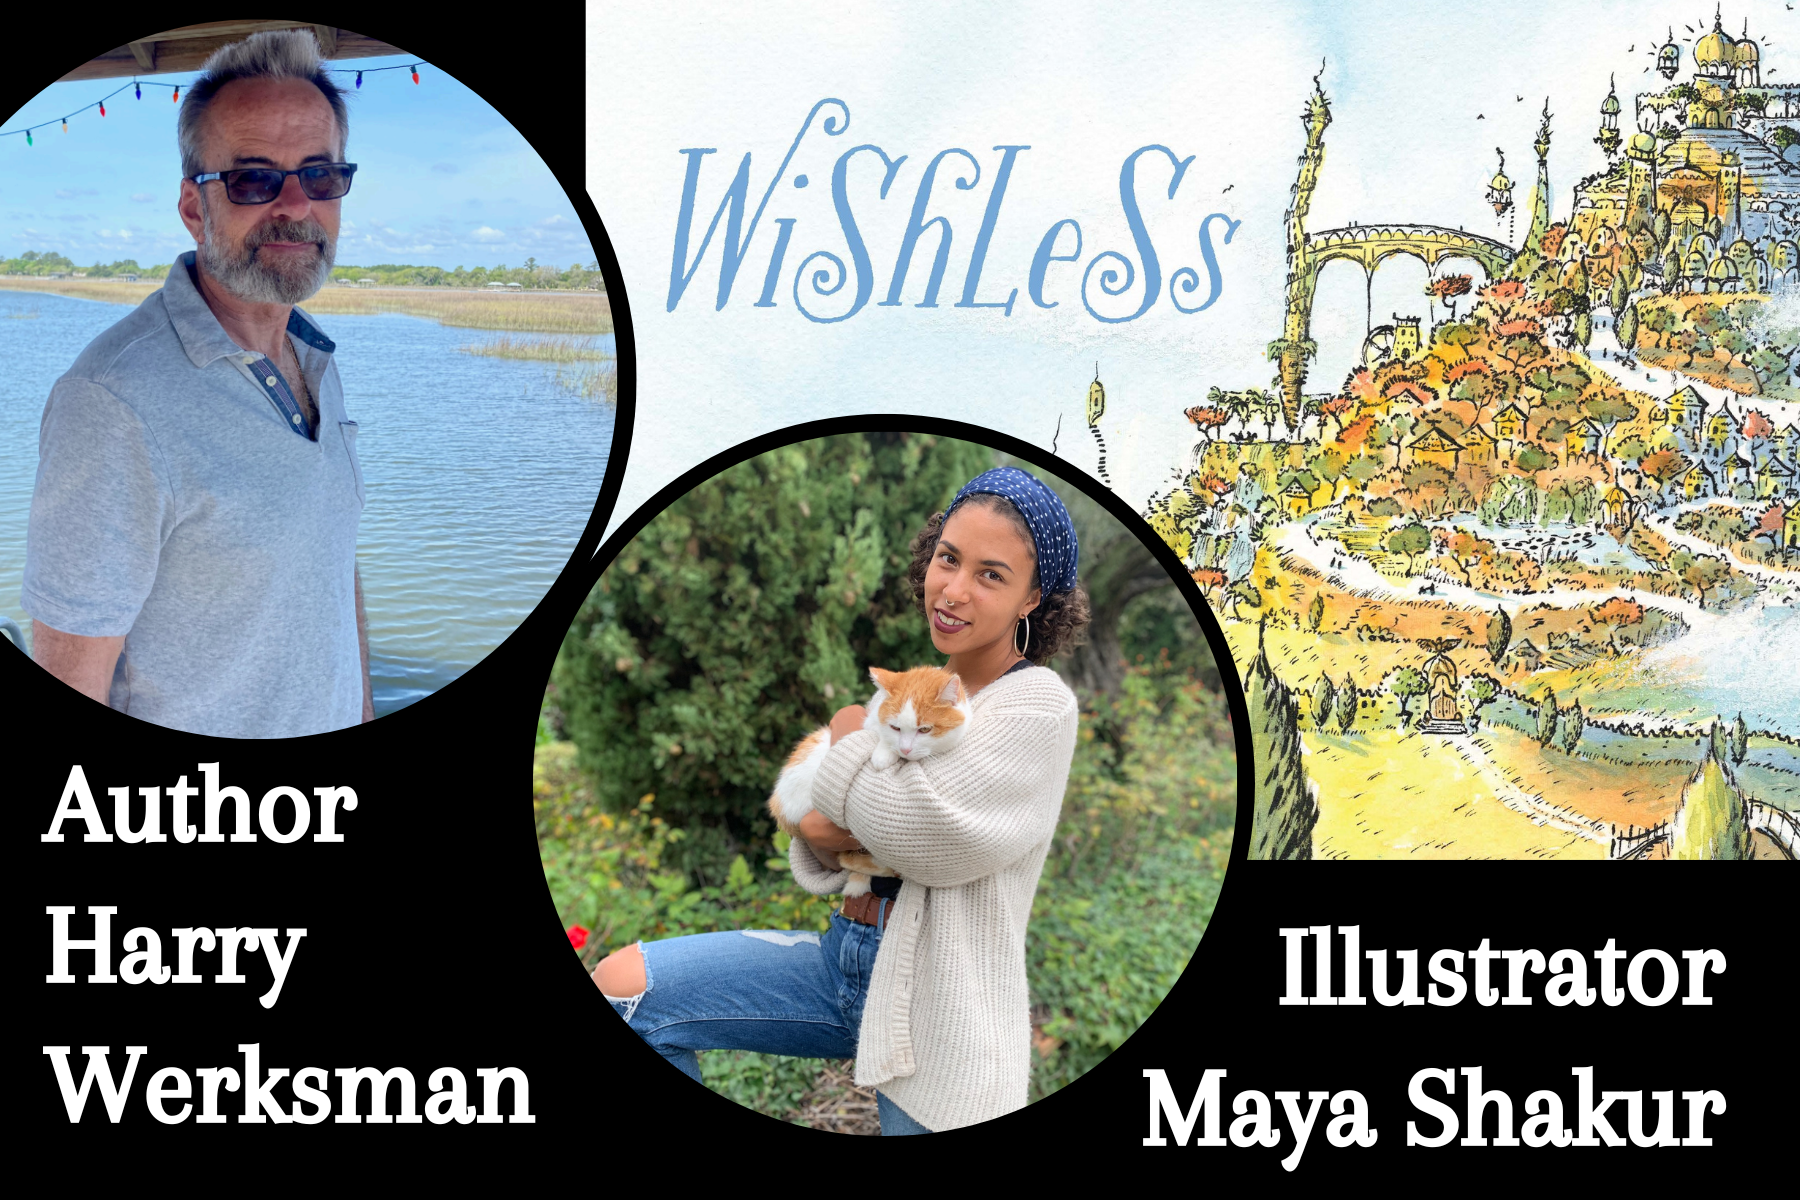 Author Harry Werksman and Illustrator Maya Shakur